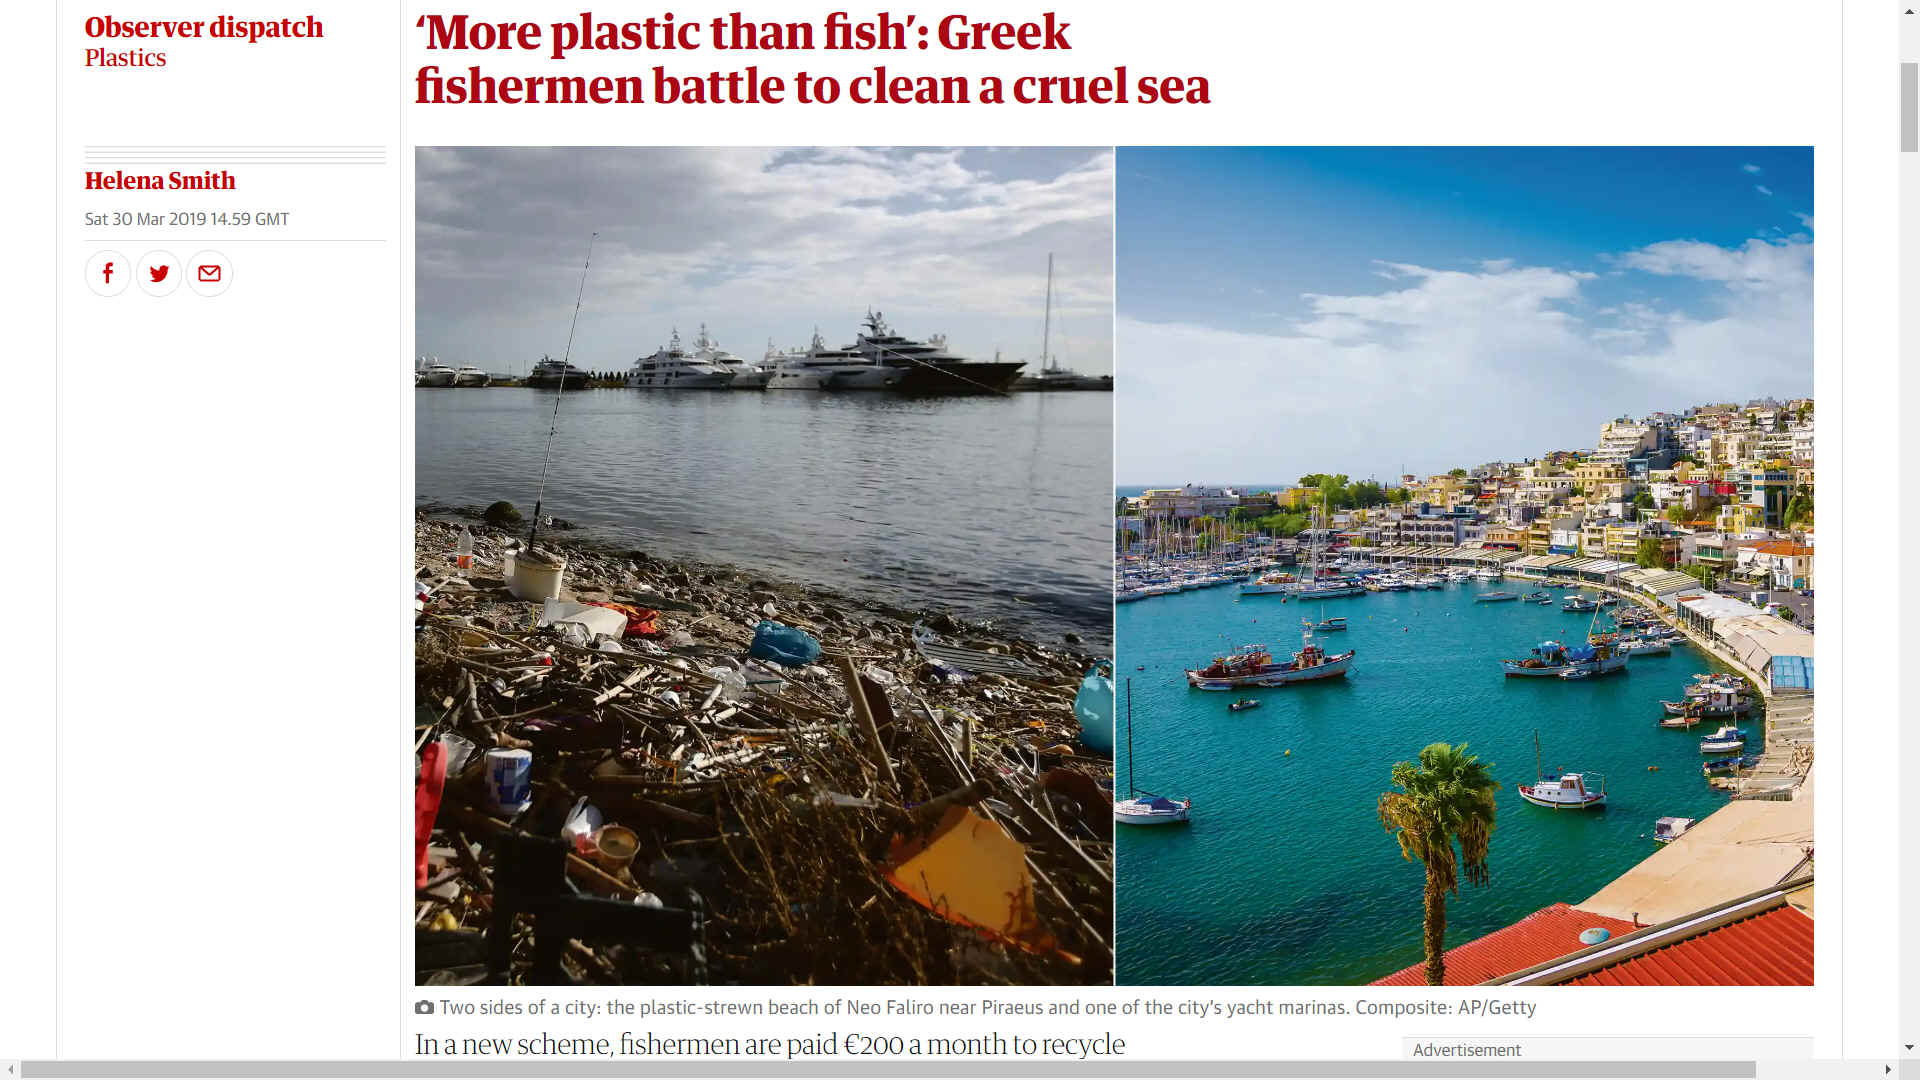 More plastic than fish in the Aegean Sea at Piraeus, Greece